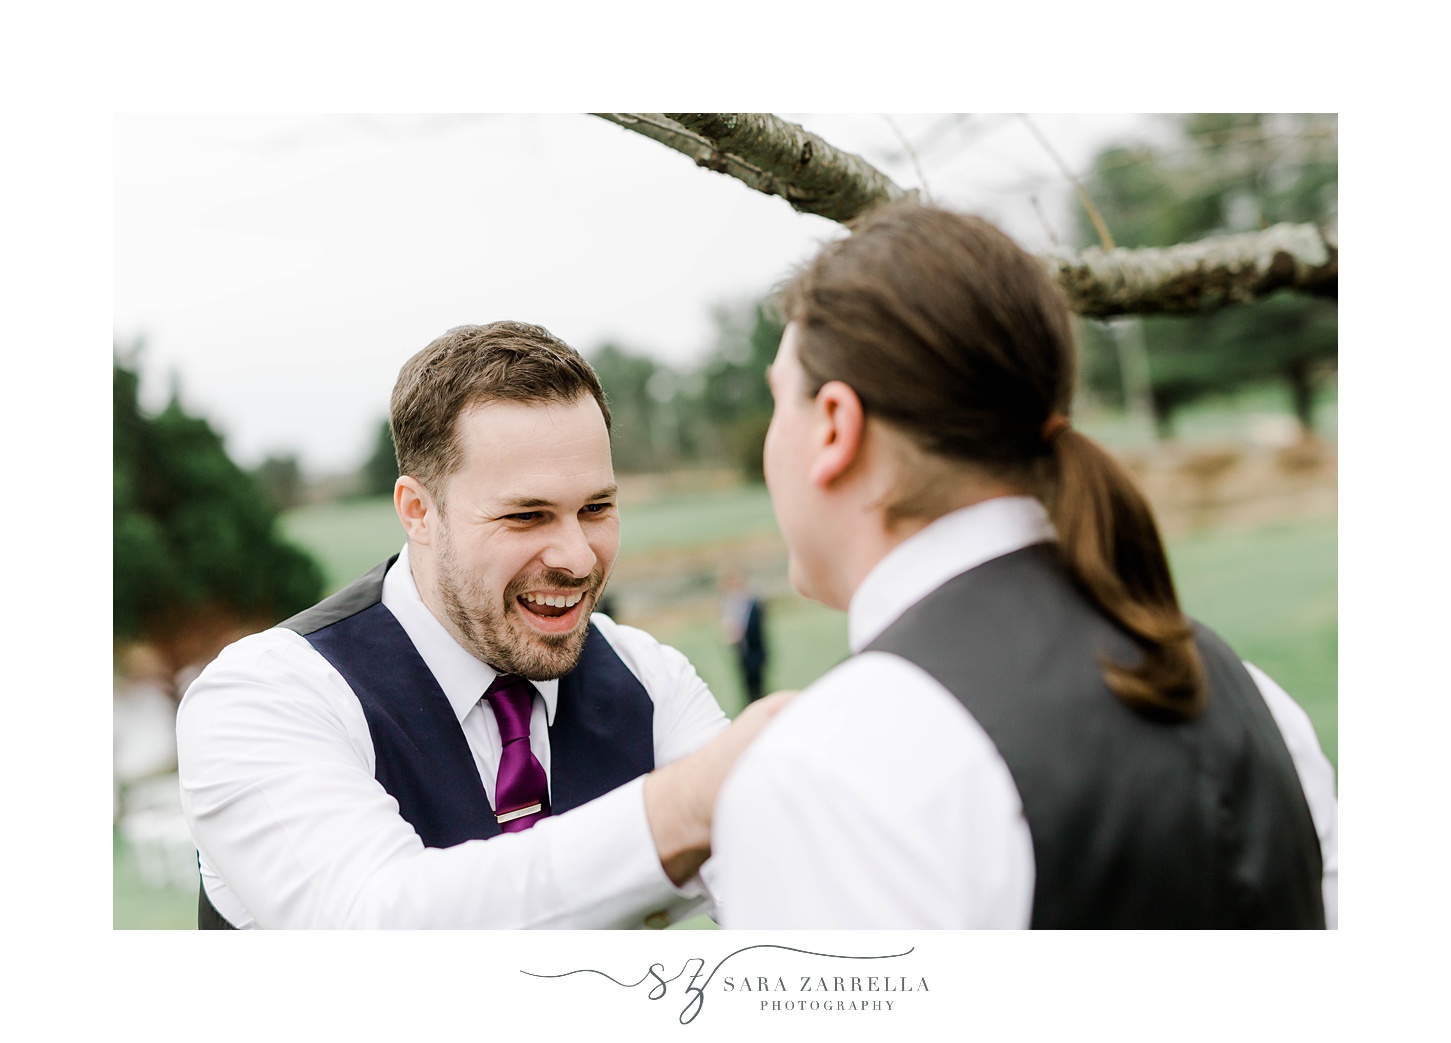 groomsman helps groom with tie on wedding day 